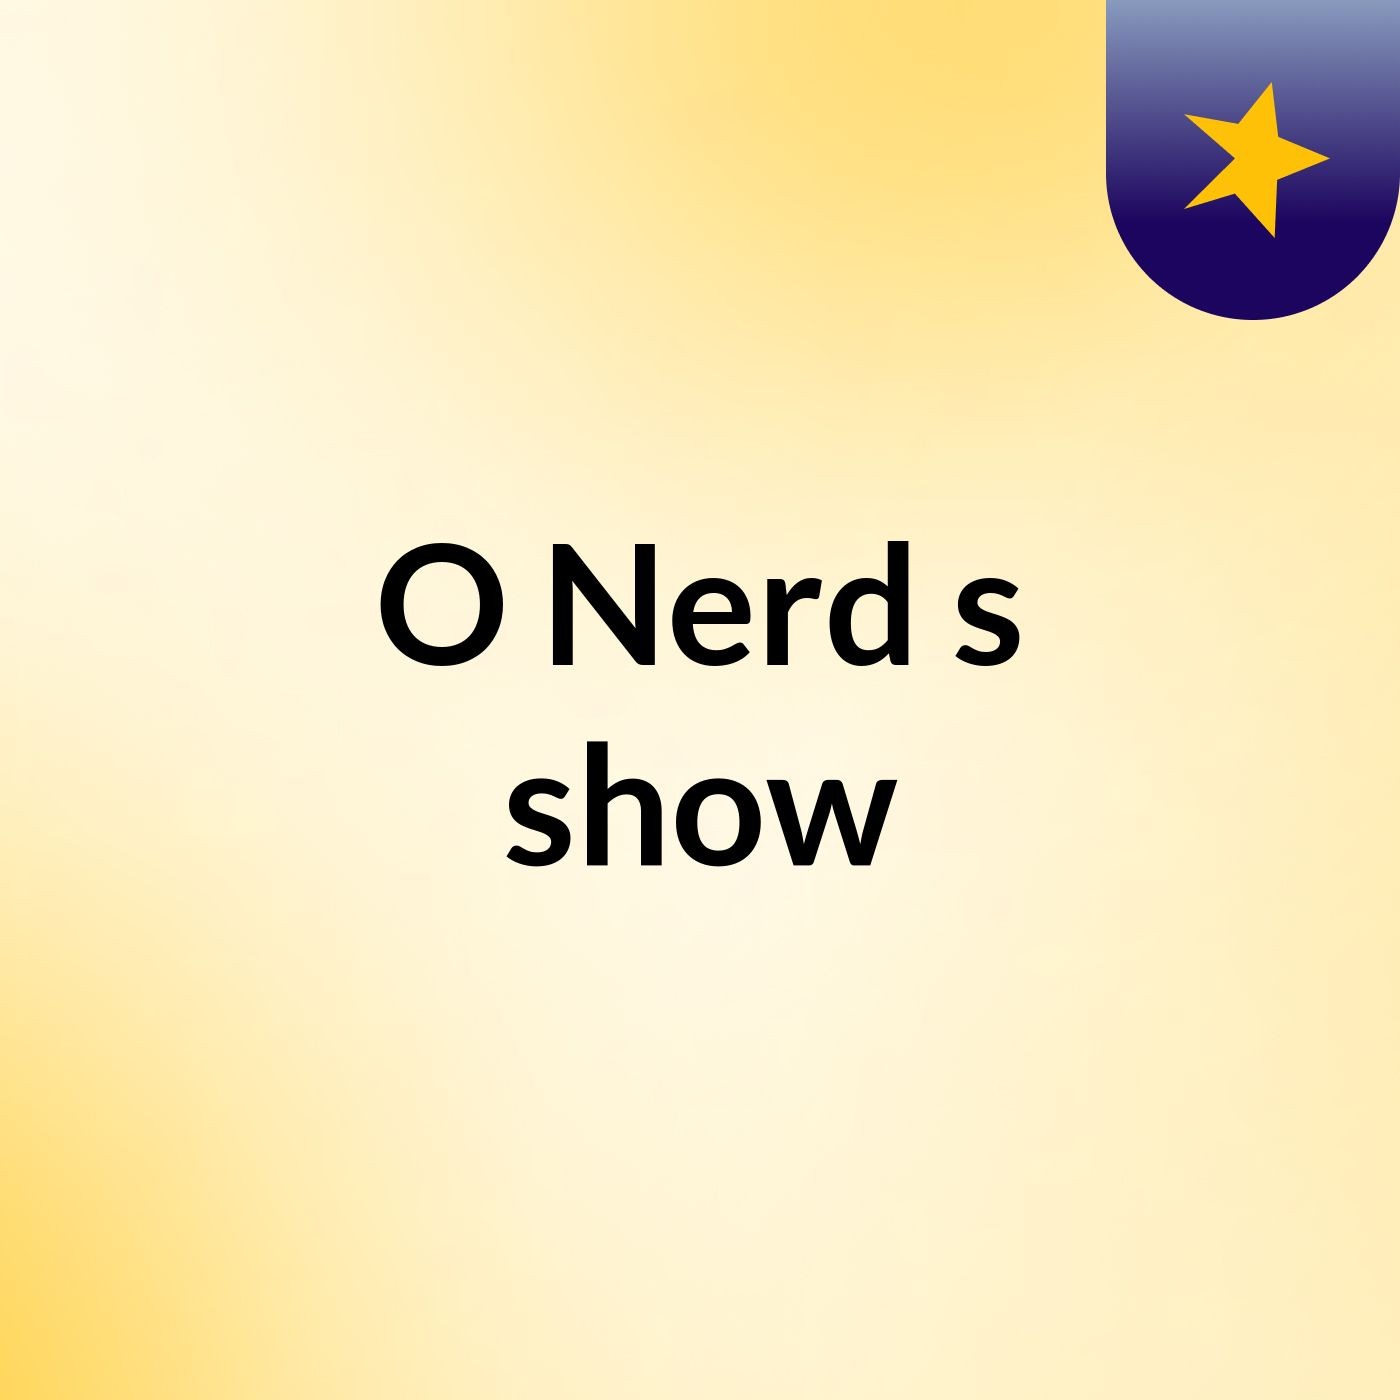 O Nerd's show